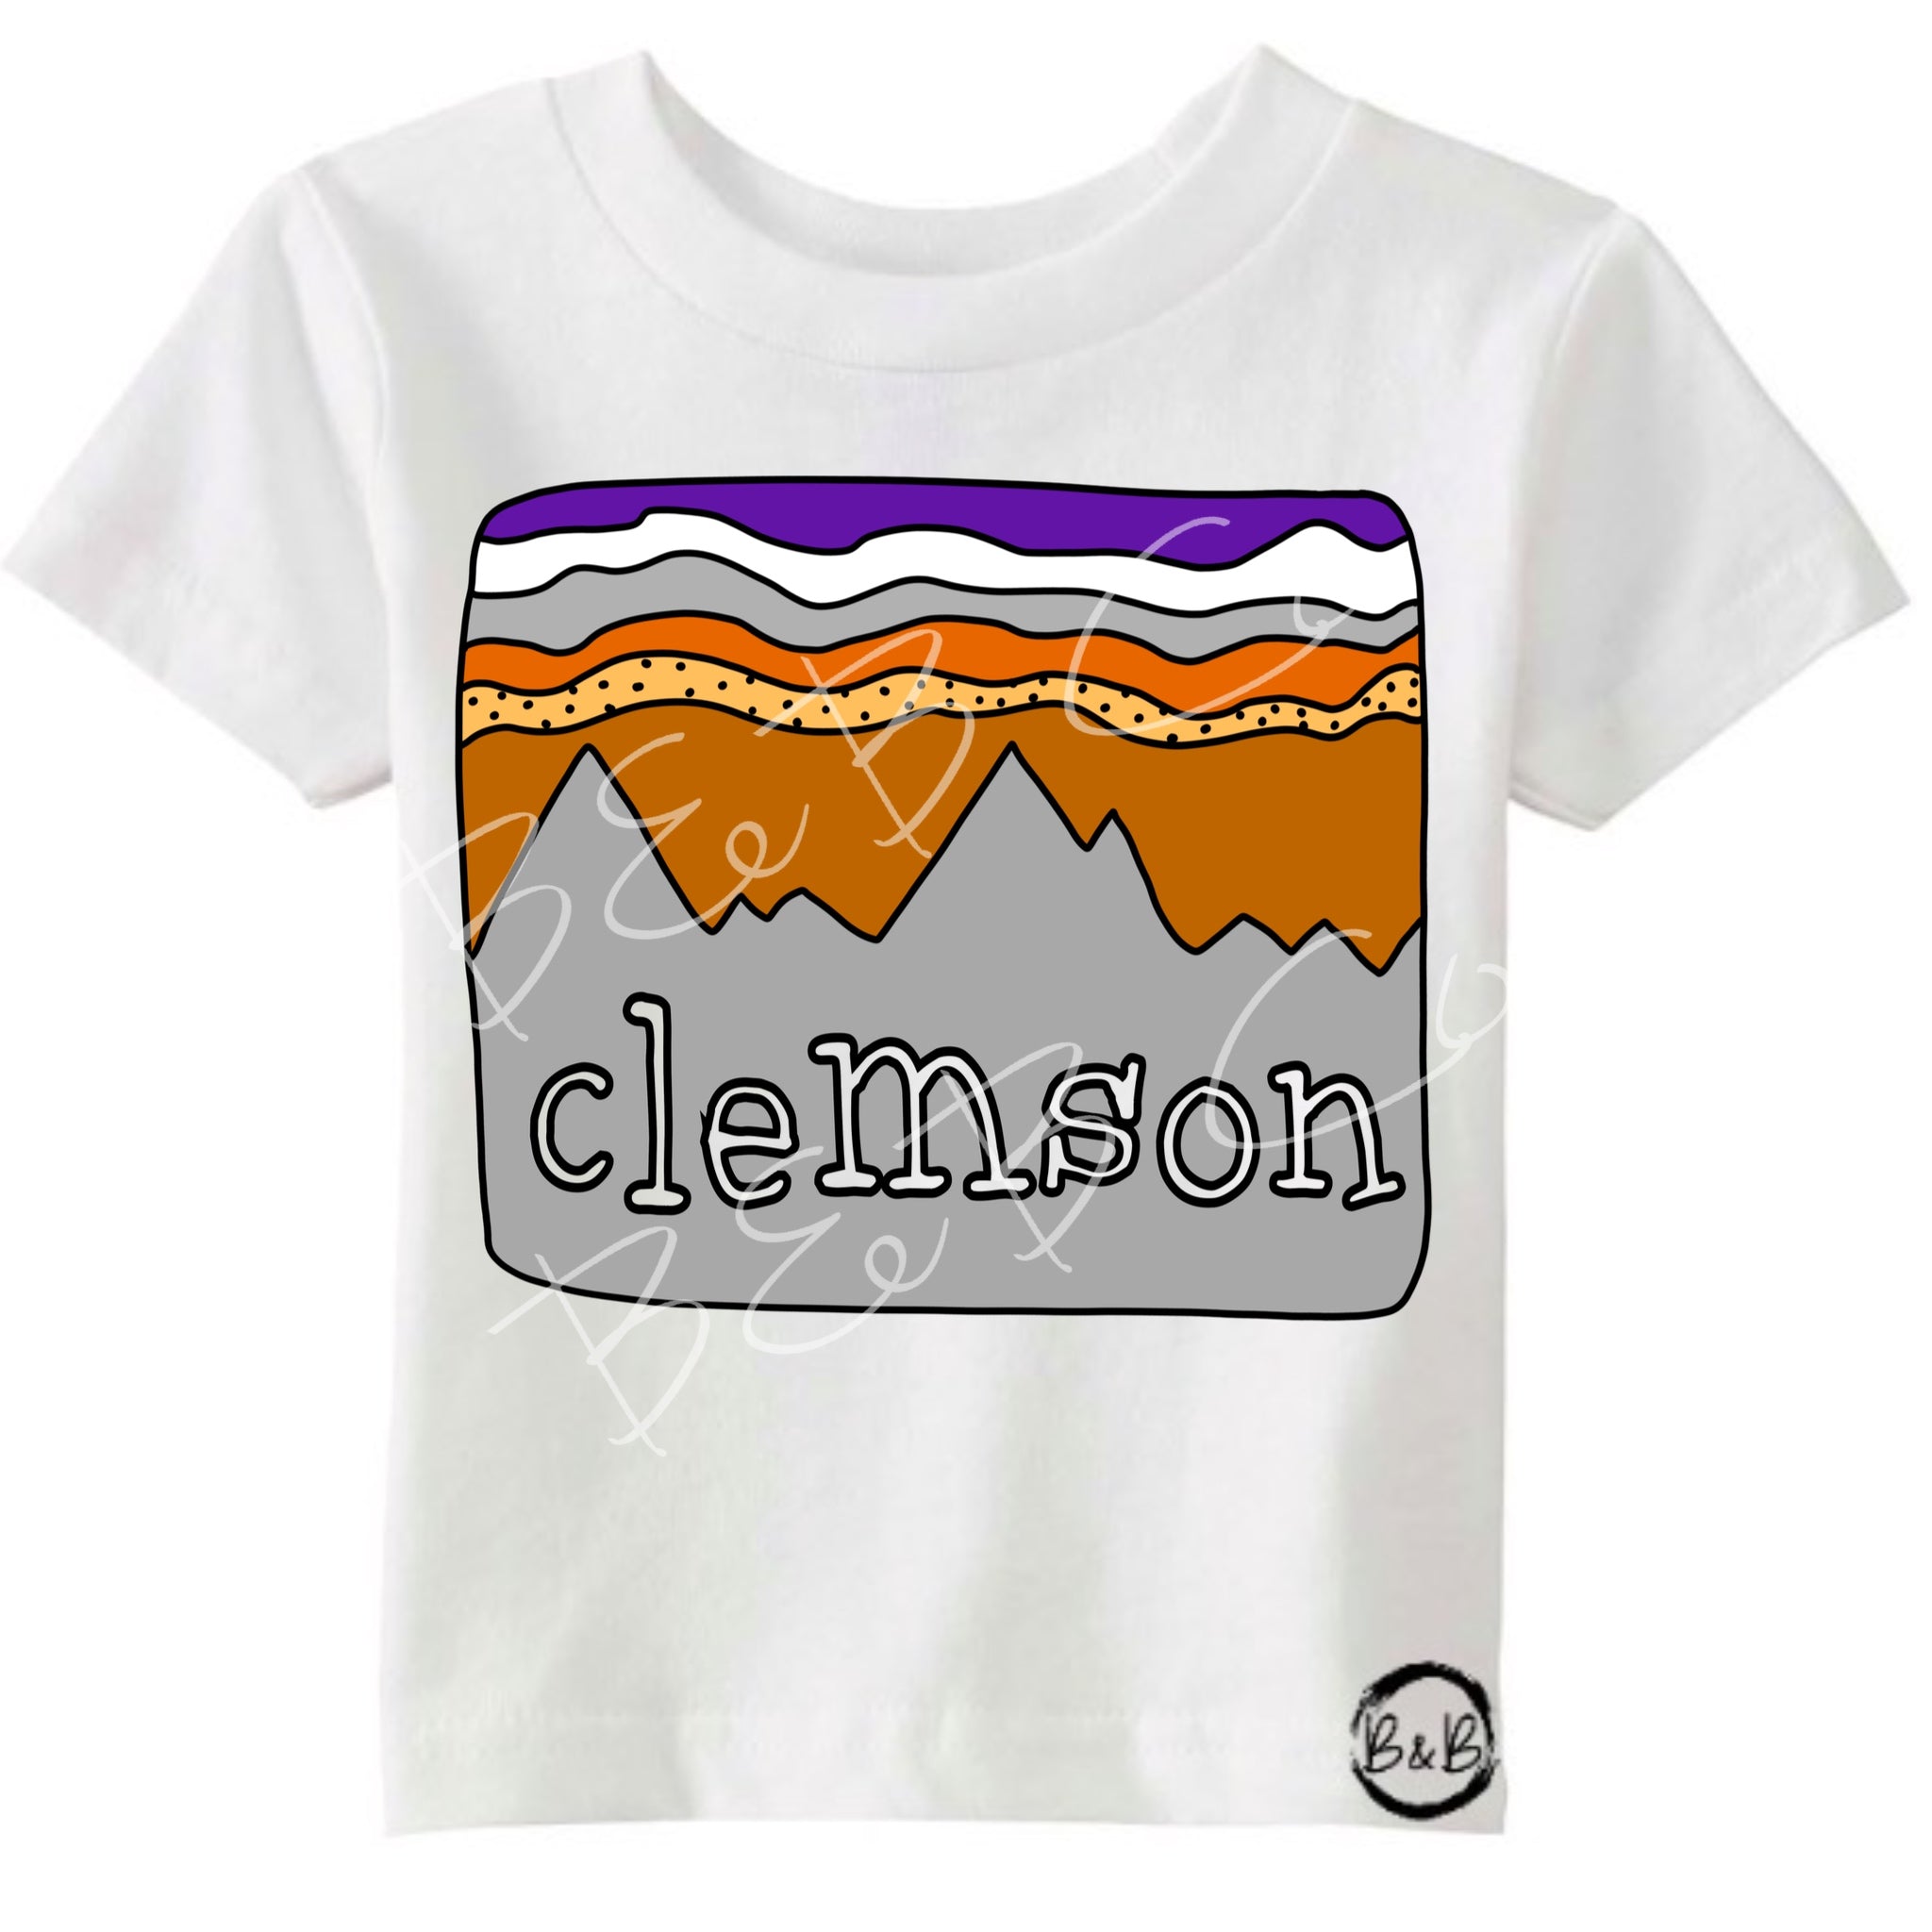 Clemson Mountains